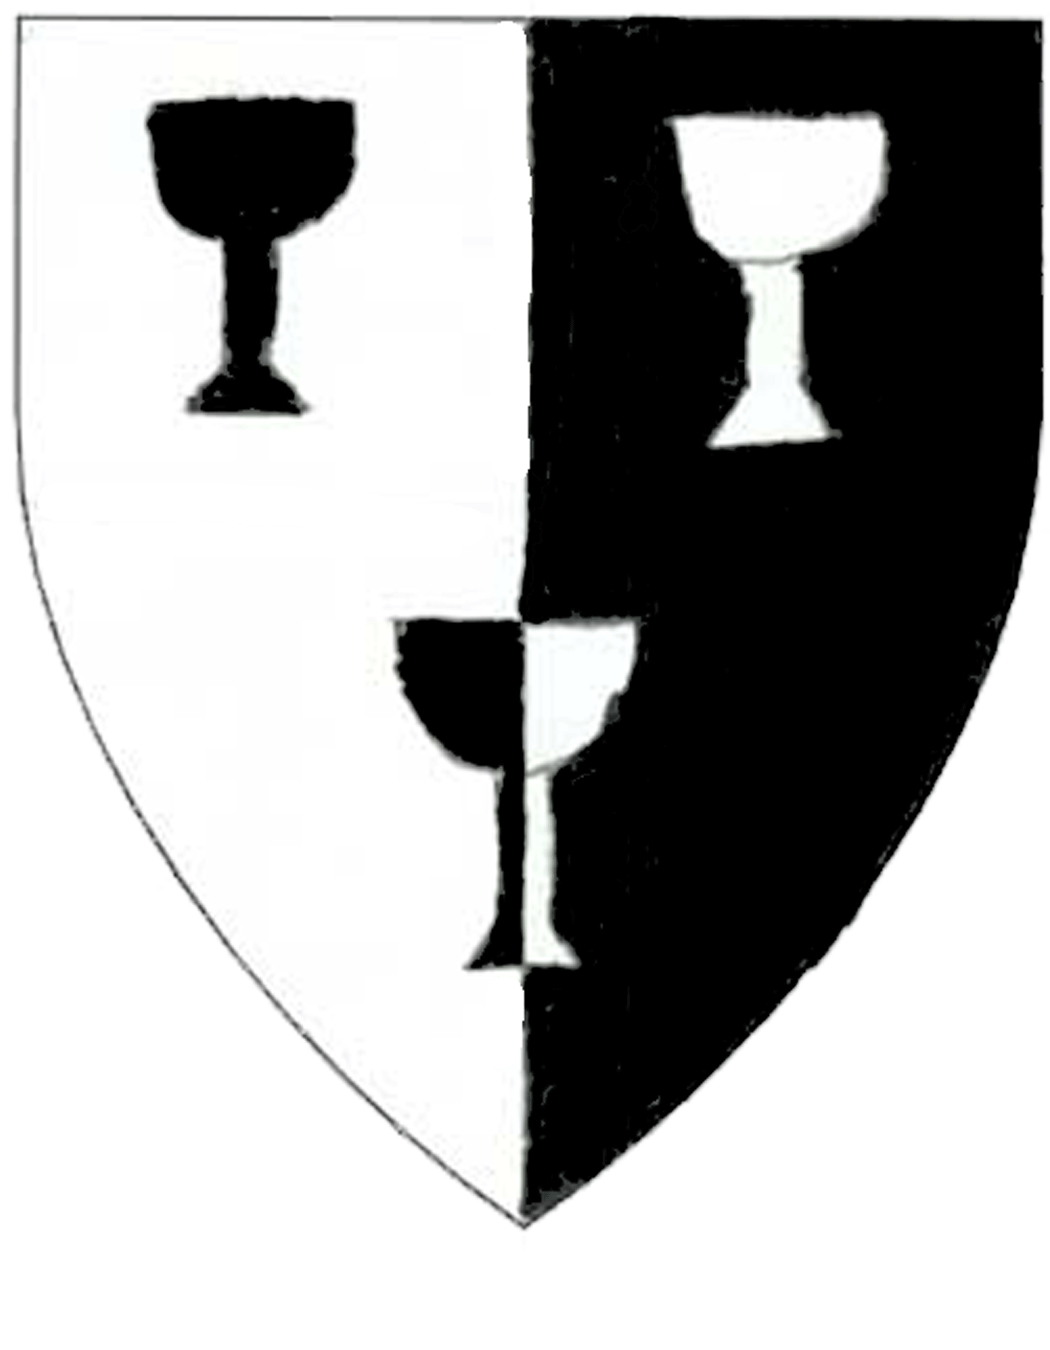 The arms of Johann von Magdeburg